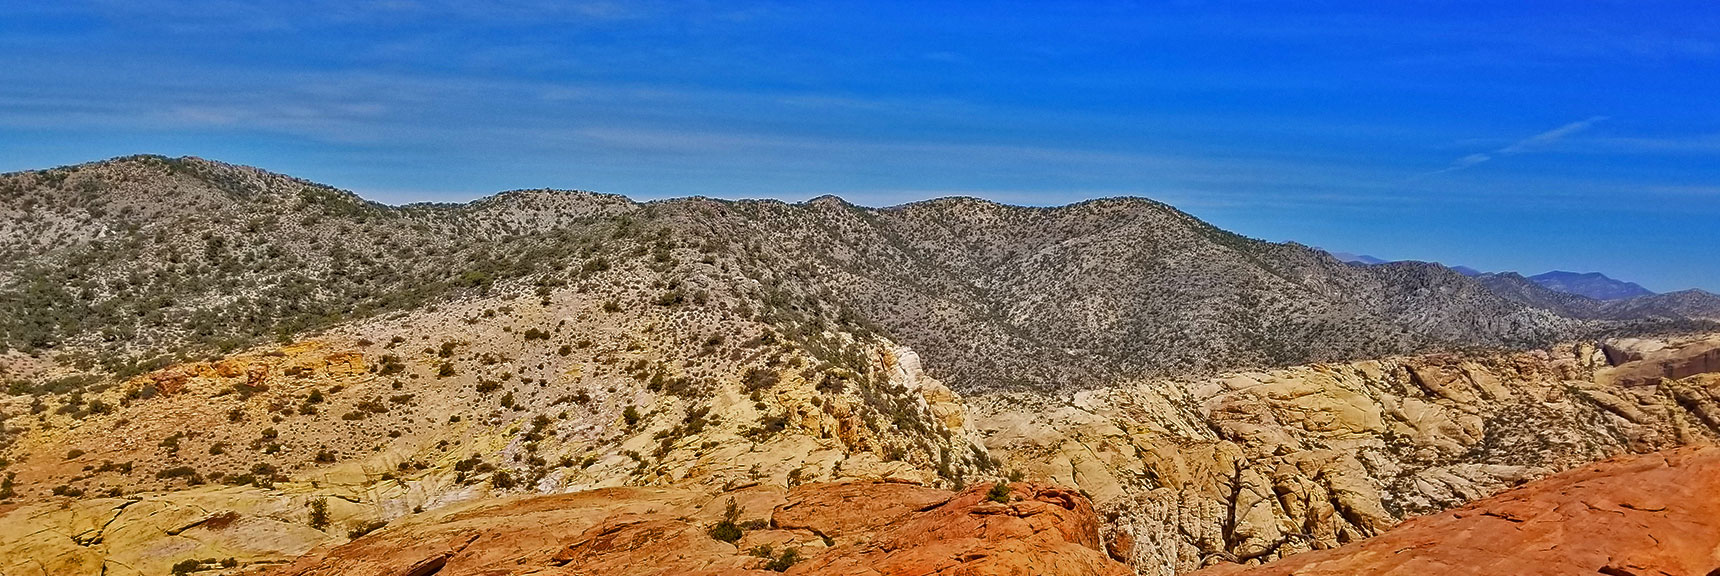 Portion of the Upper Crest Ridge Between Windy Peak and Mt. Wilson | Rainbow Mountains Upper Crest Ridge, Nevada